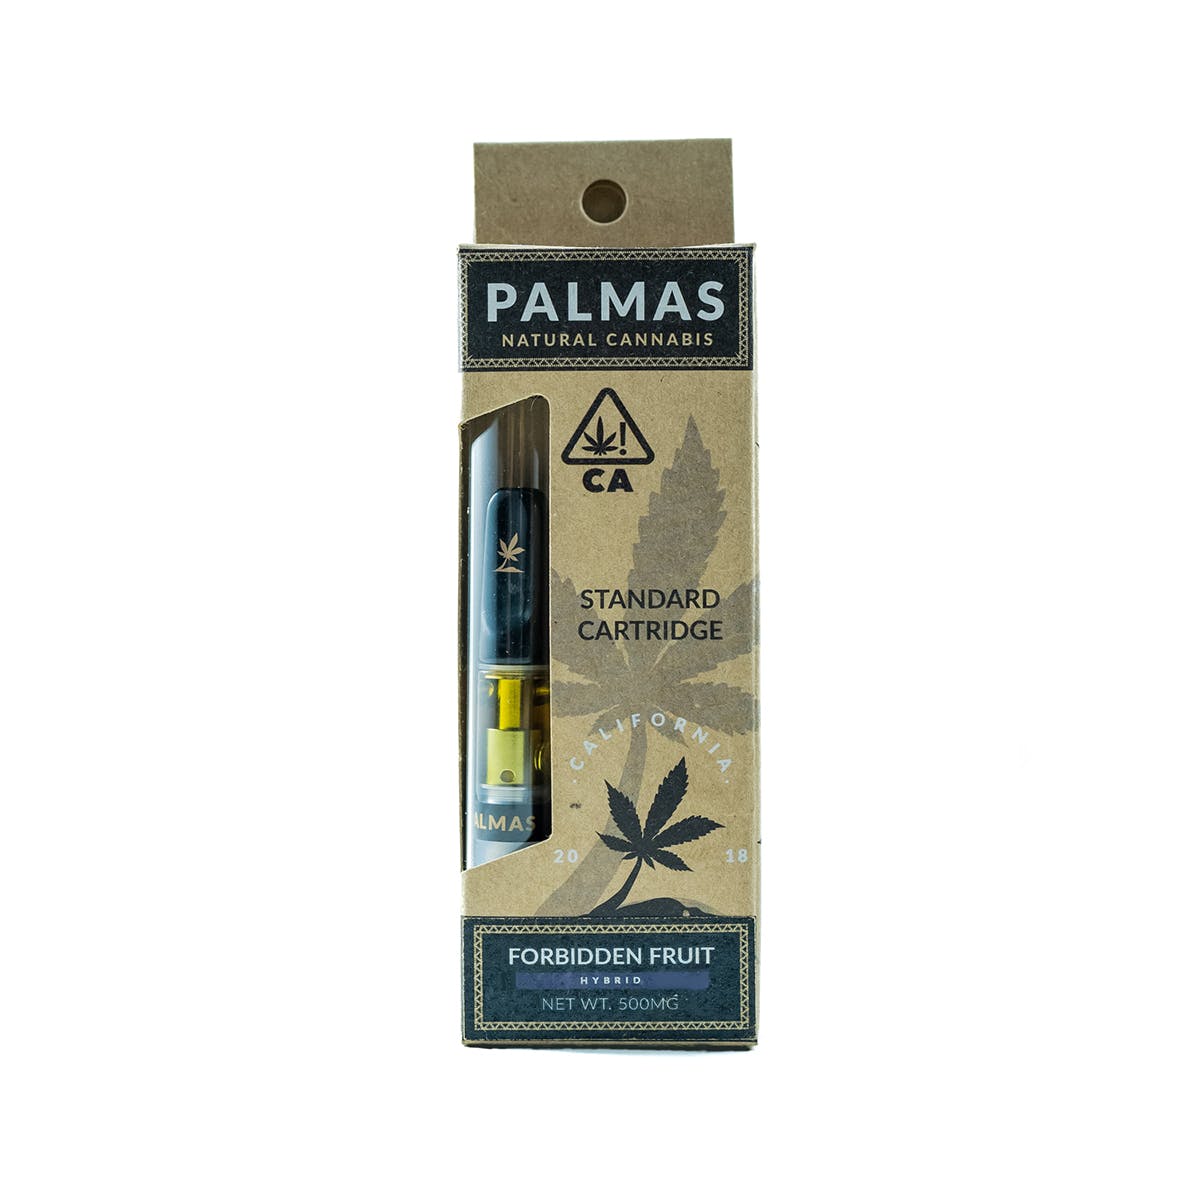 marijuana-dispensaries-straight-up-20-in-compton-palmas-standard-cartridge-forbidden-fruit